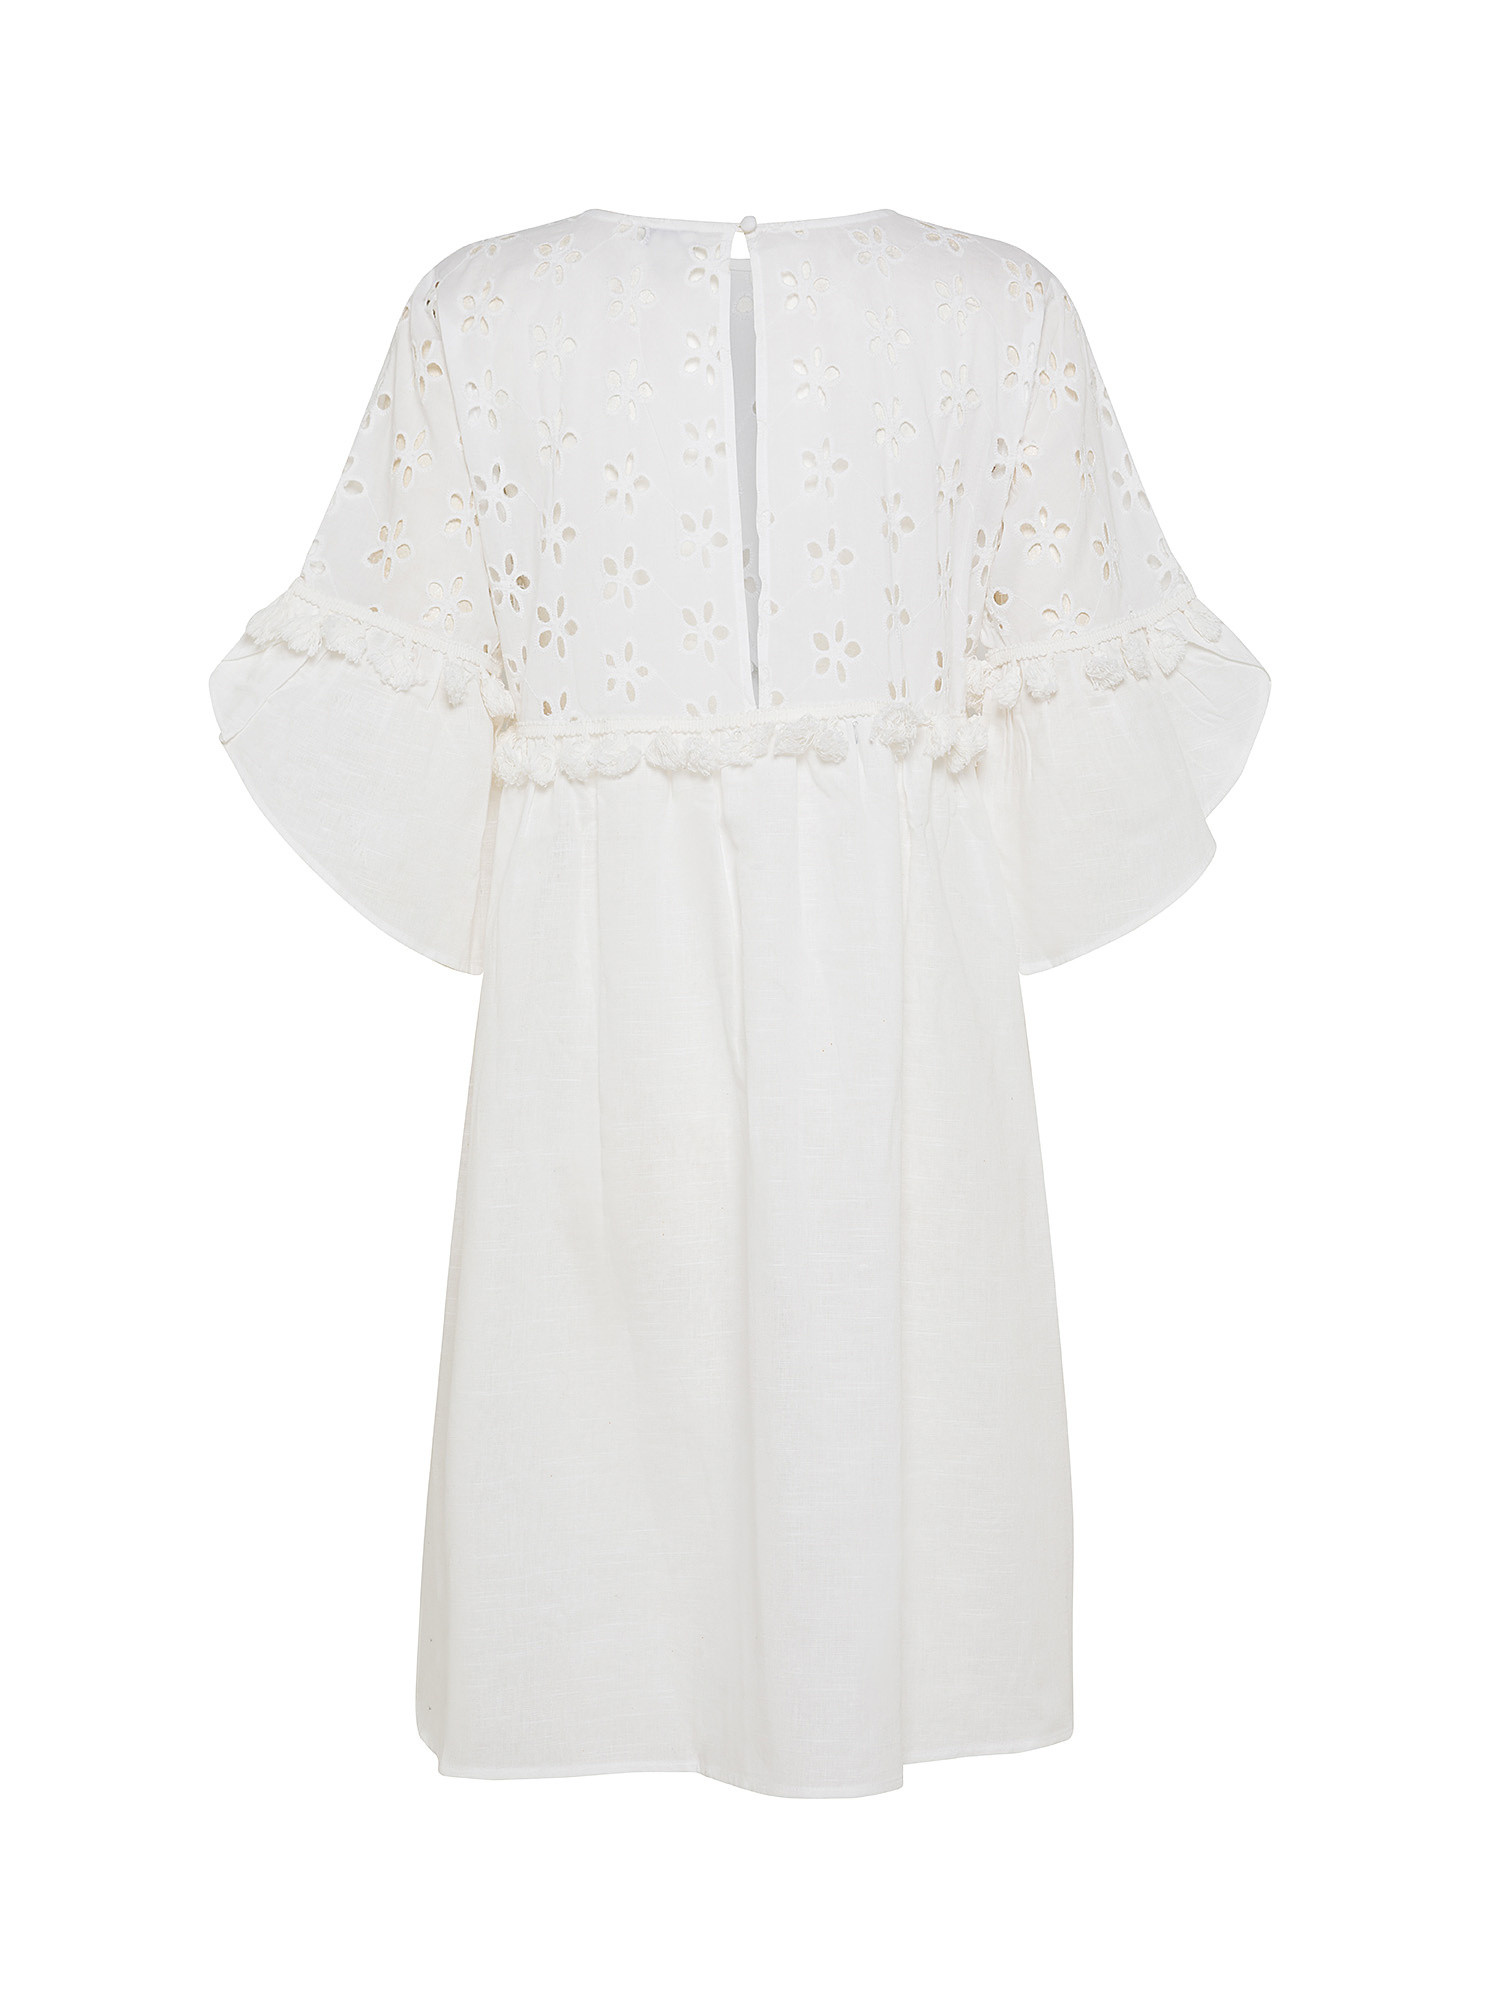 Koan - Sangallo dress, White, large image number 1